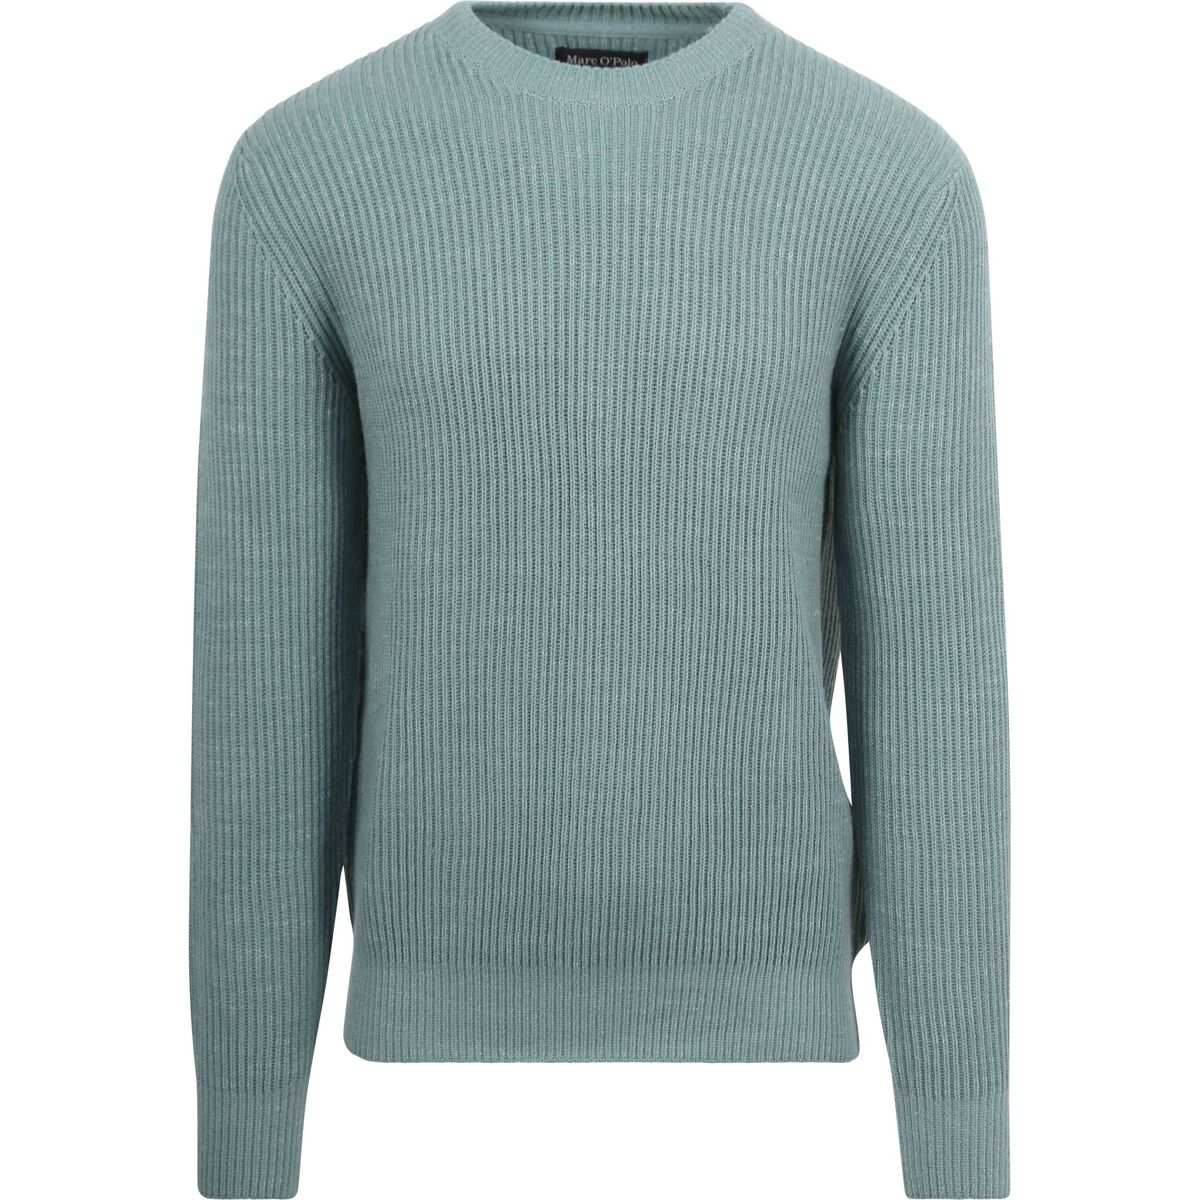 Textiel Heren Sweaters / Sweatshirts Marc O'Polo Pullover Wol Blend Staalblauw Blauw